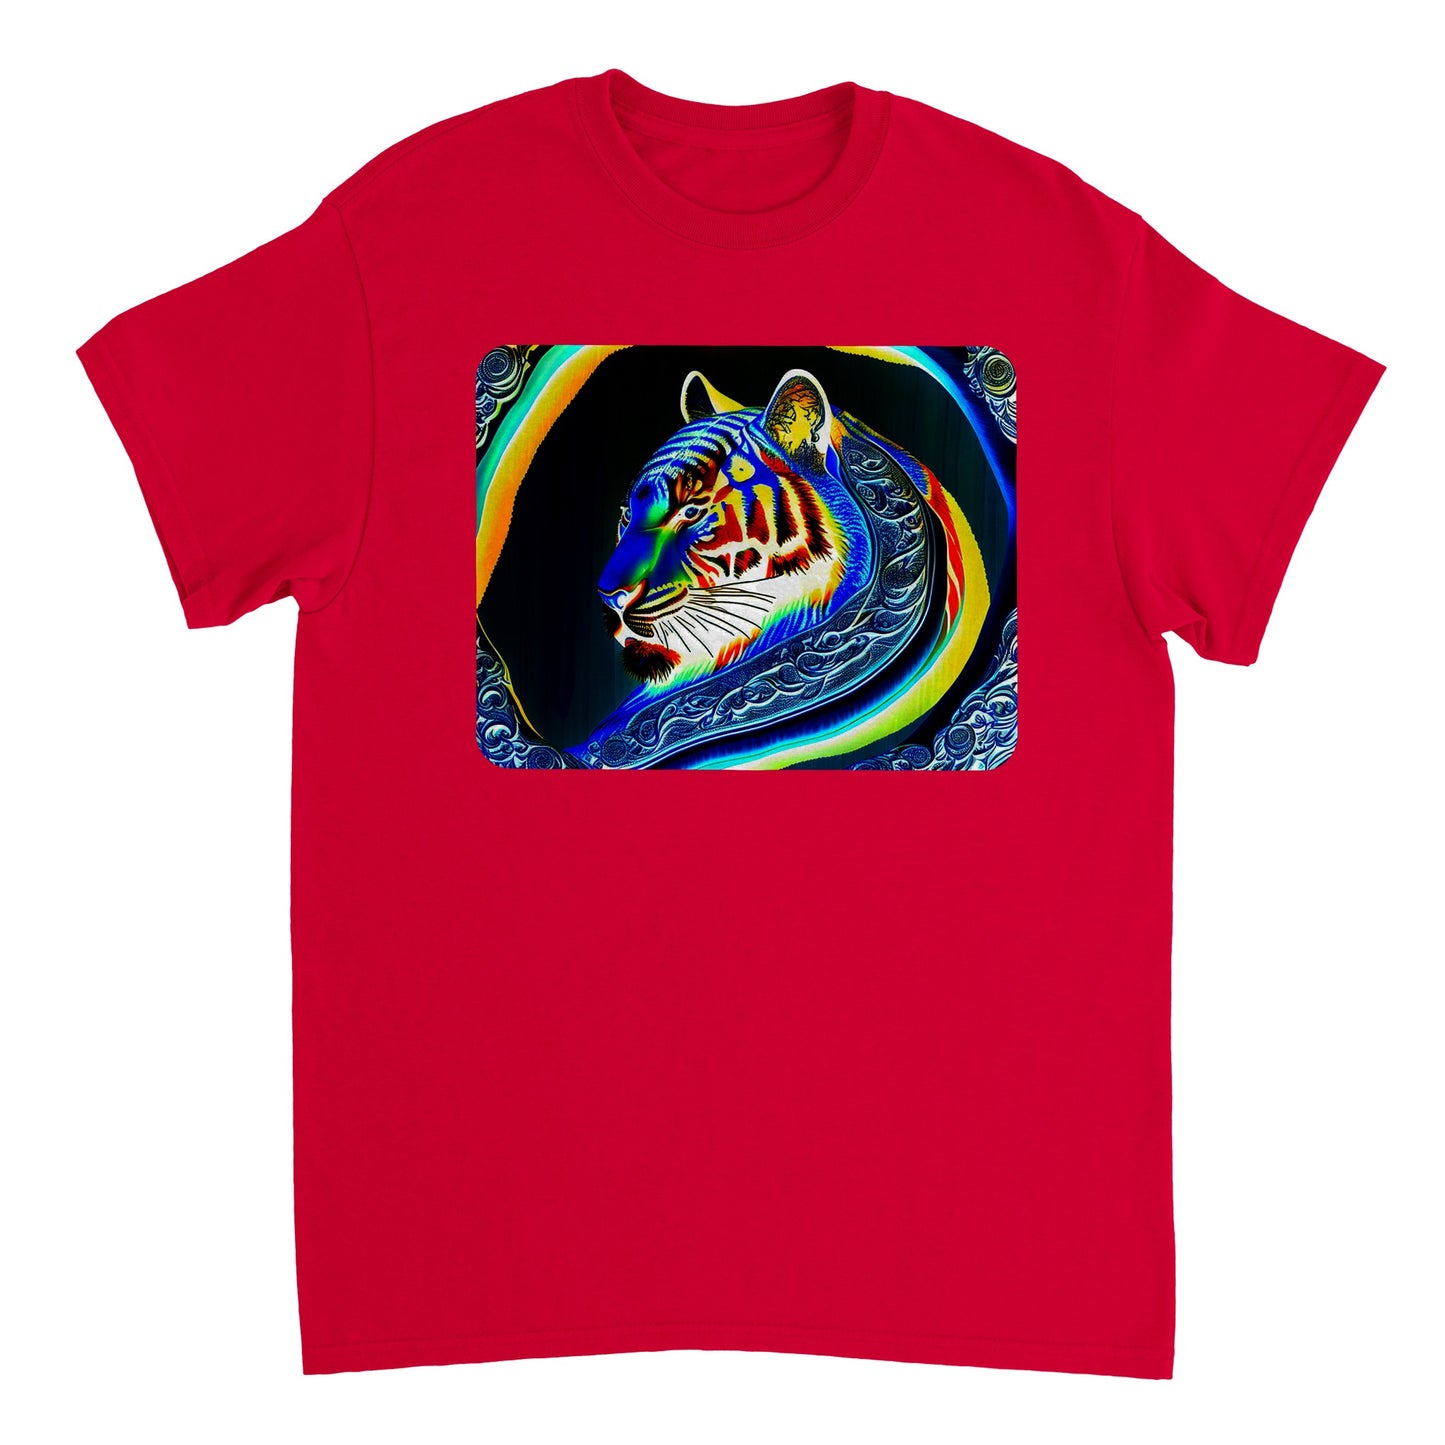 Rainbow Colors Animal - Heavyweight Unisex Crewneck T-shirt 16